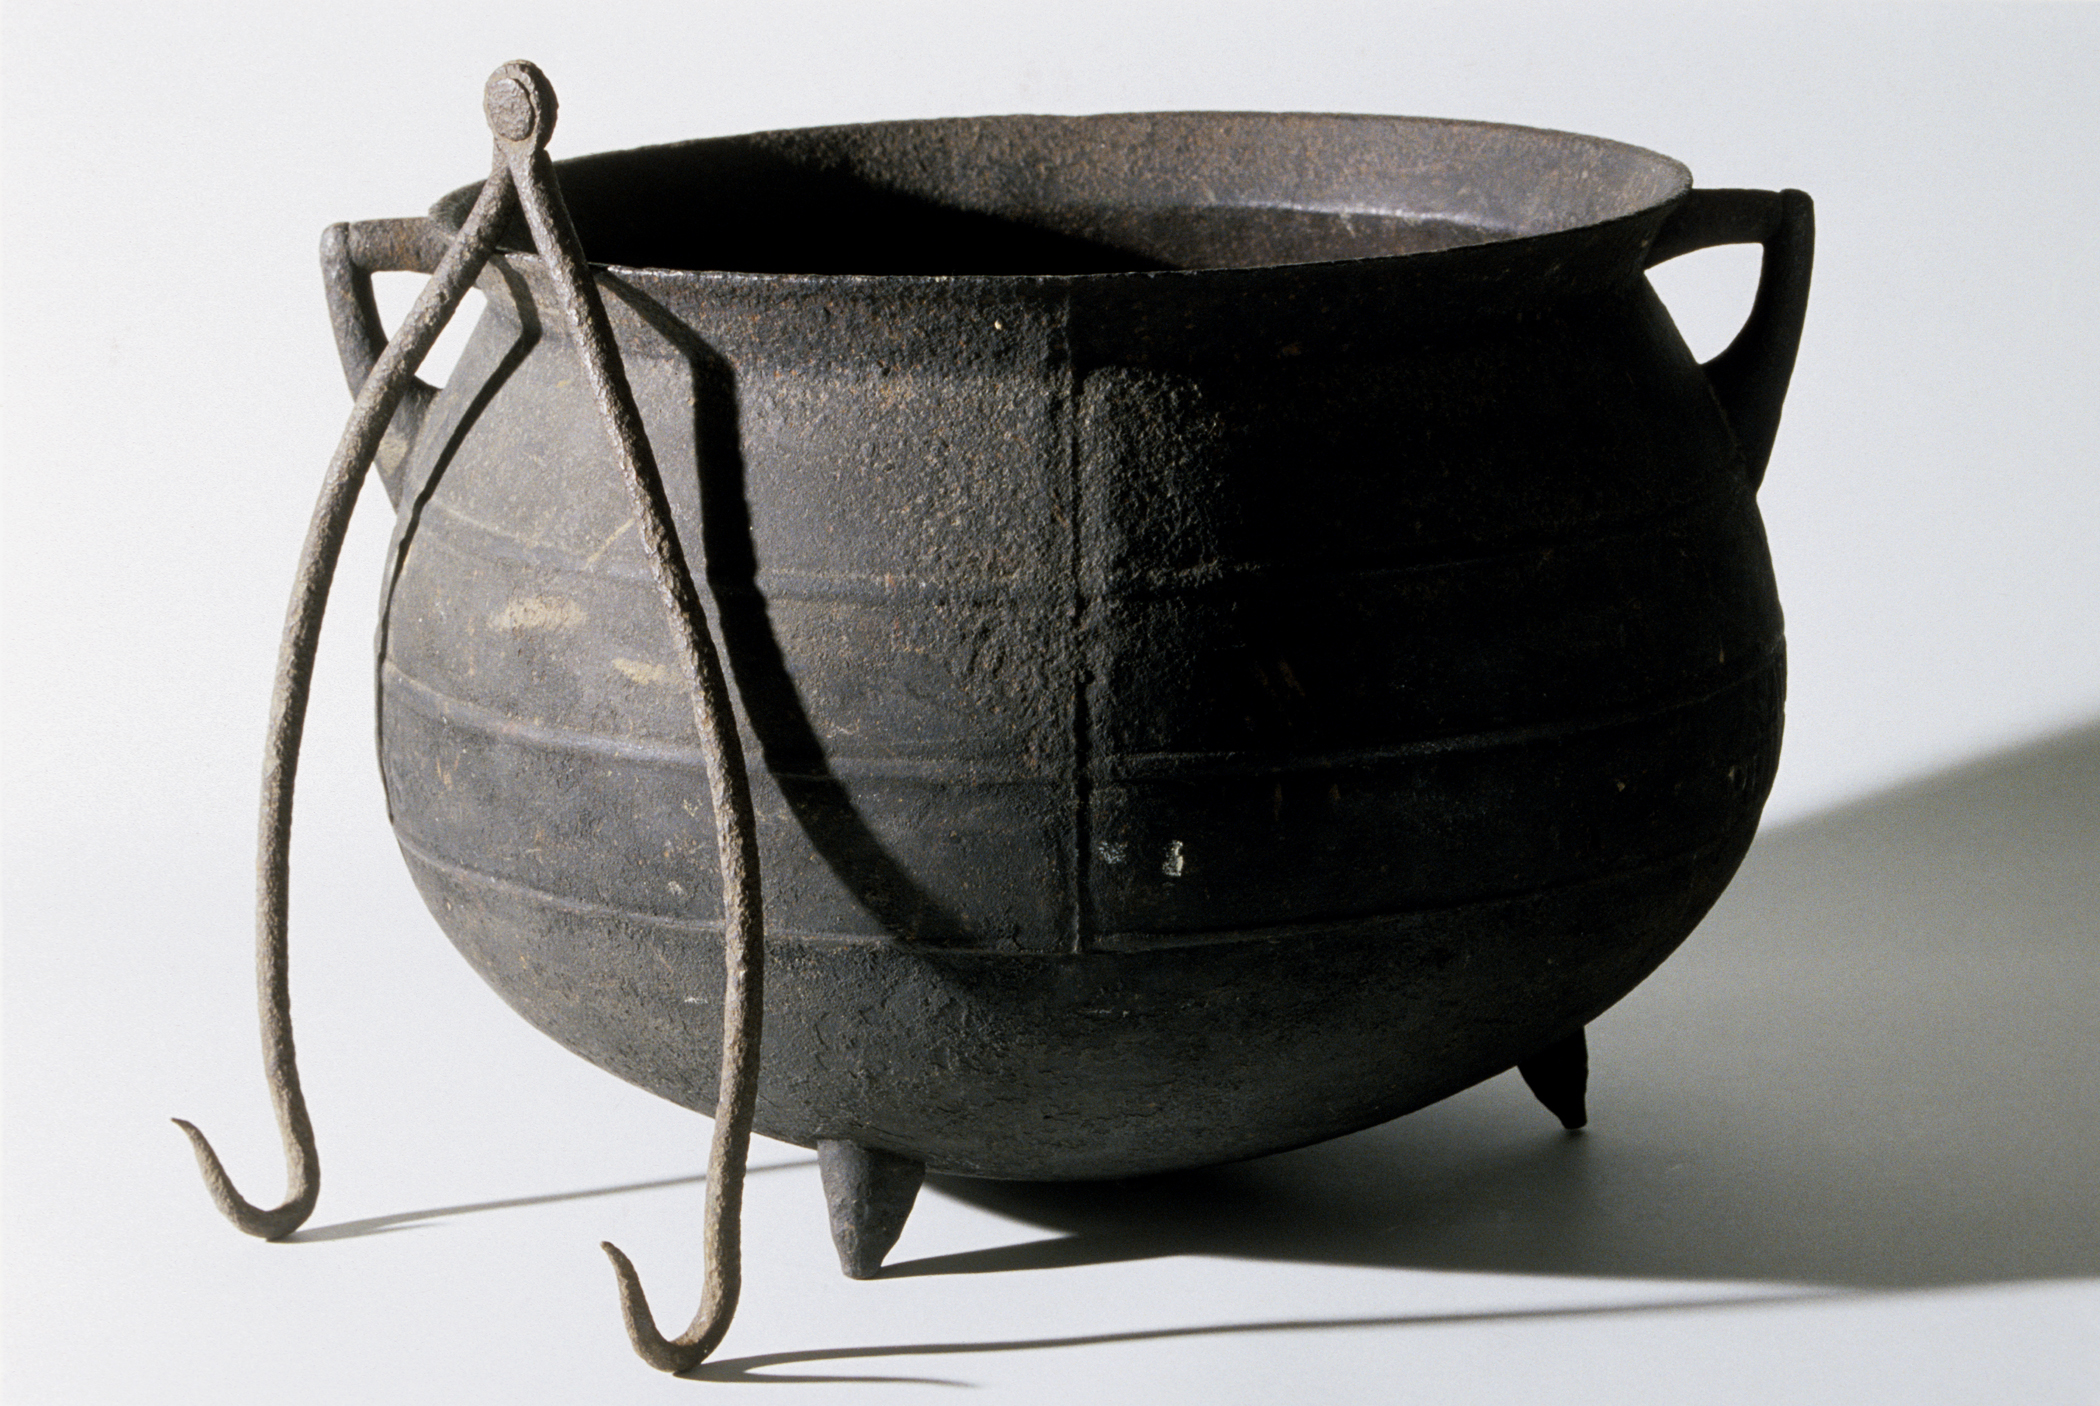 Rare Cast Iron Pot, Savery and Company, Philadelphia, Pennsylvania